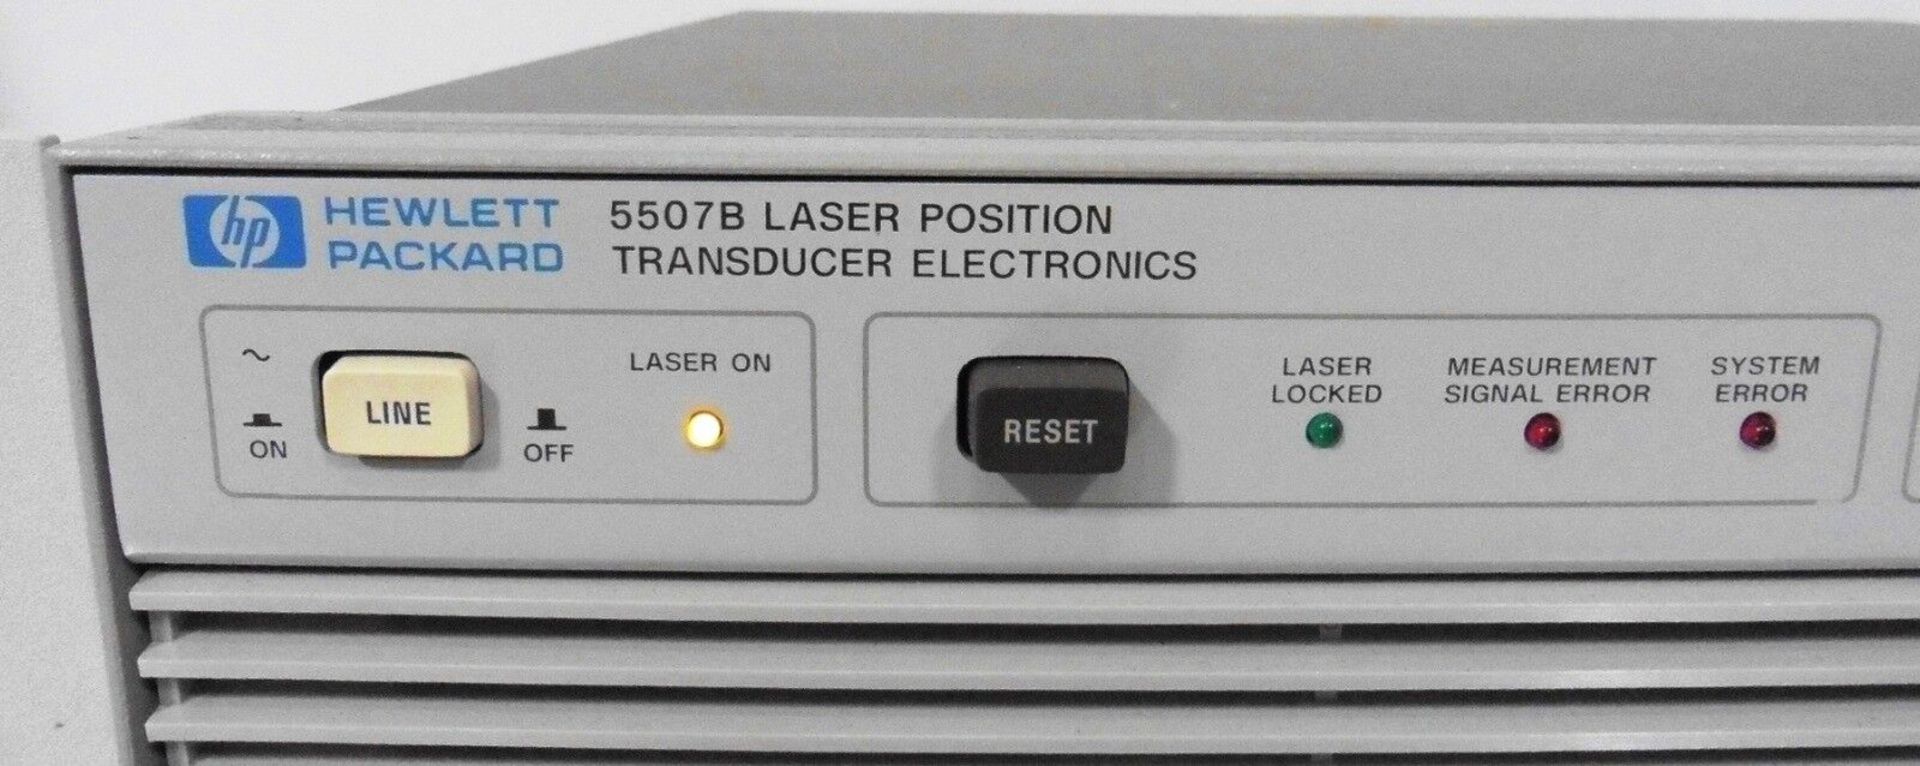 HP 5507B Laser Position Transducer Electronics - Image 2 of 2